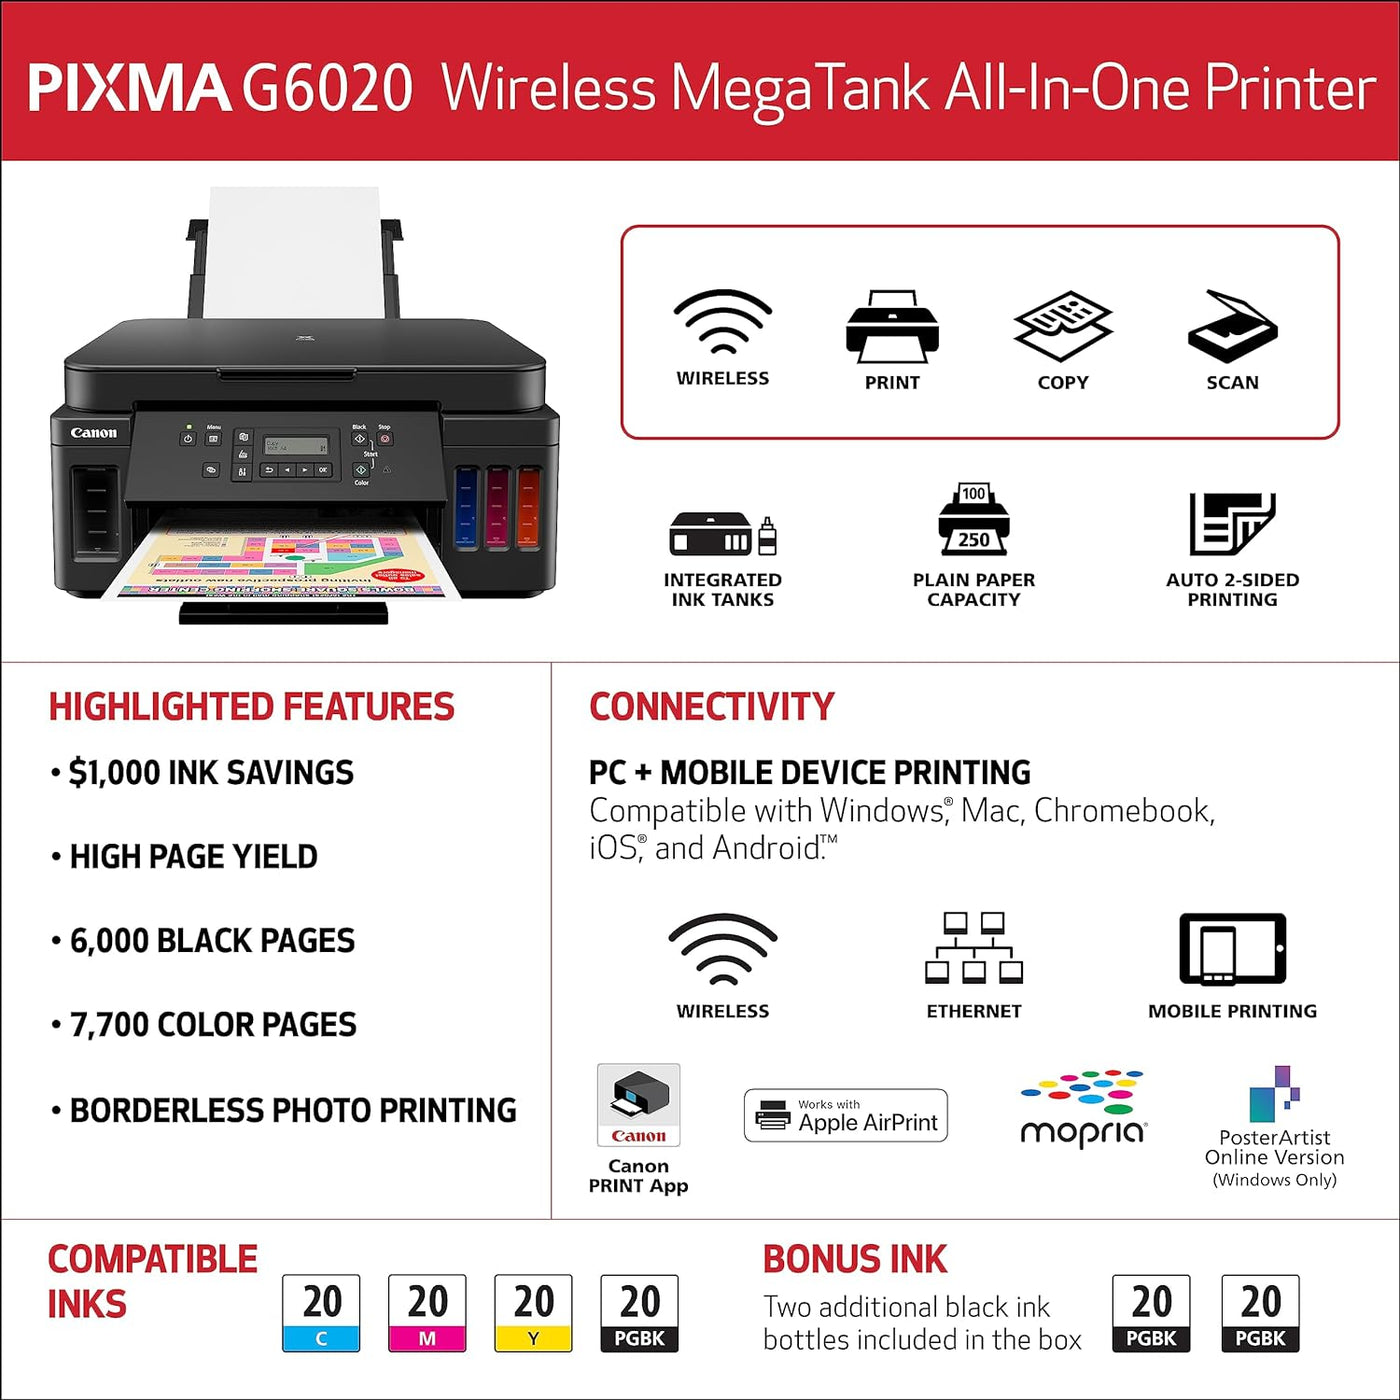 PIXMA G6020 Wireless MegaTank